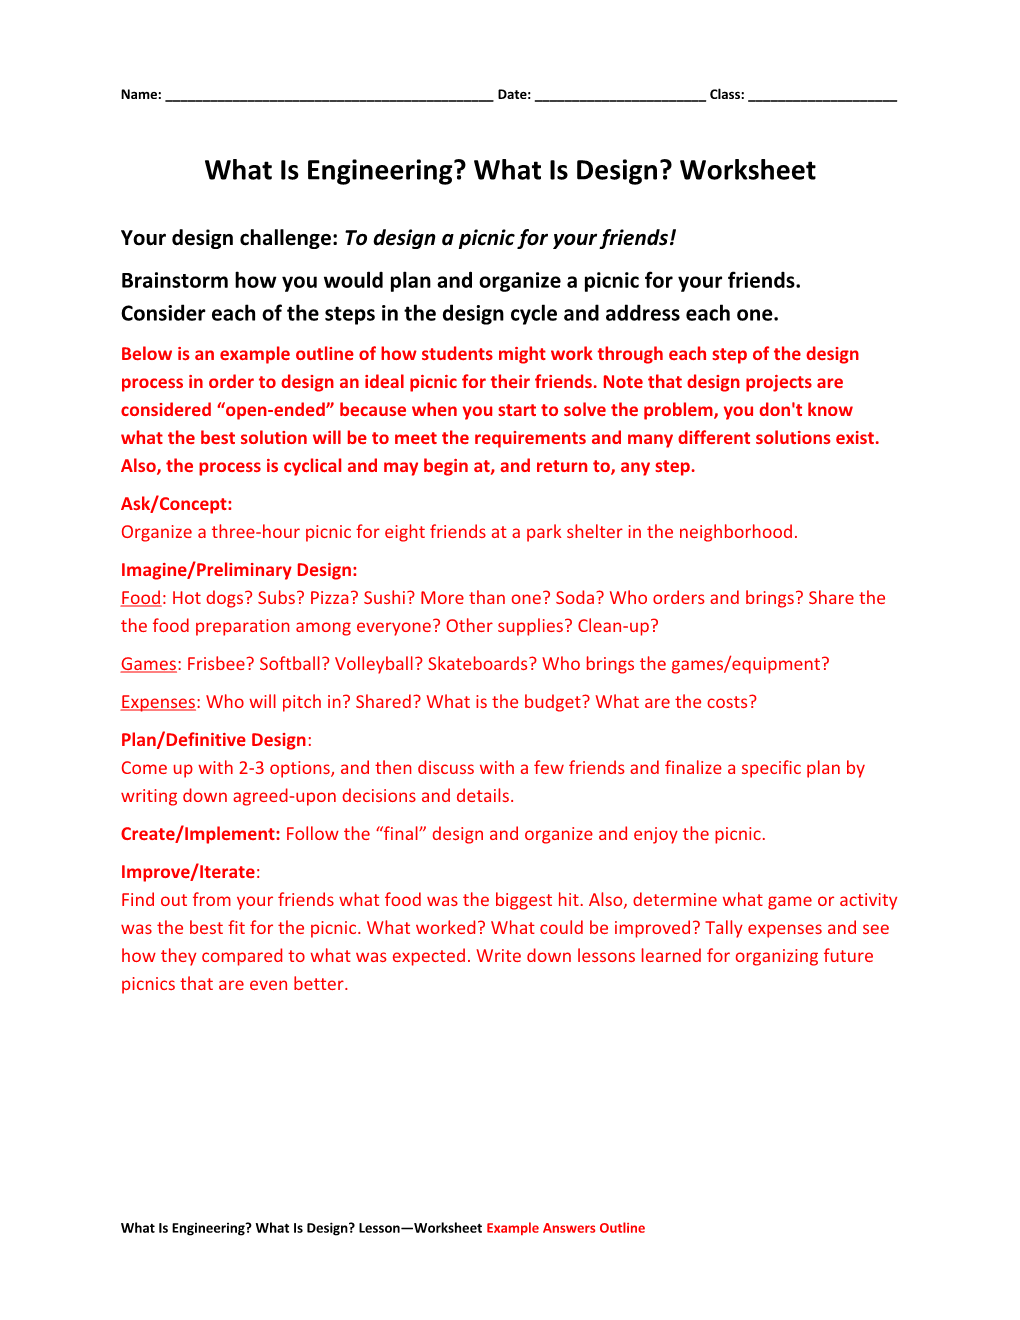 What Is Engineering? What Is Design? Worksheet